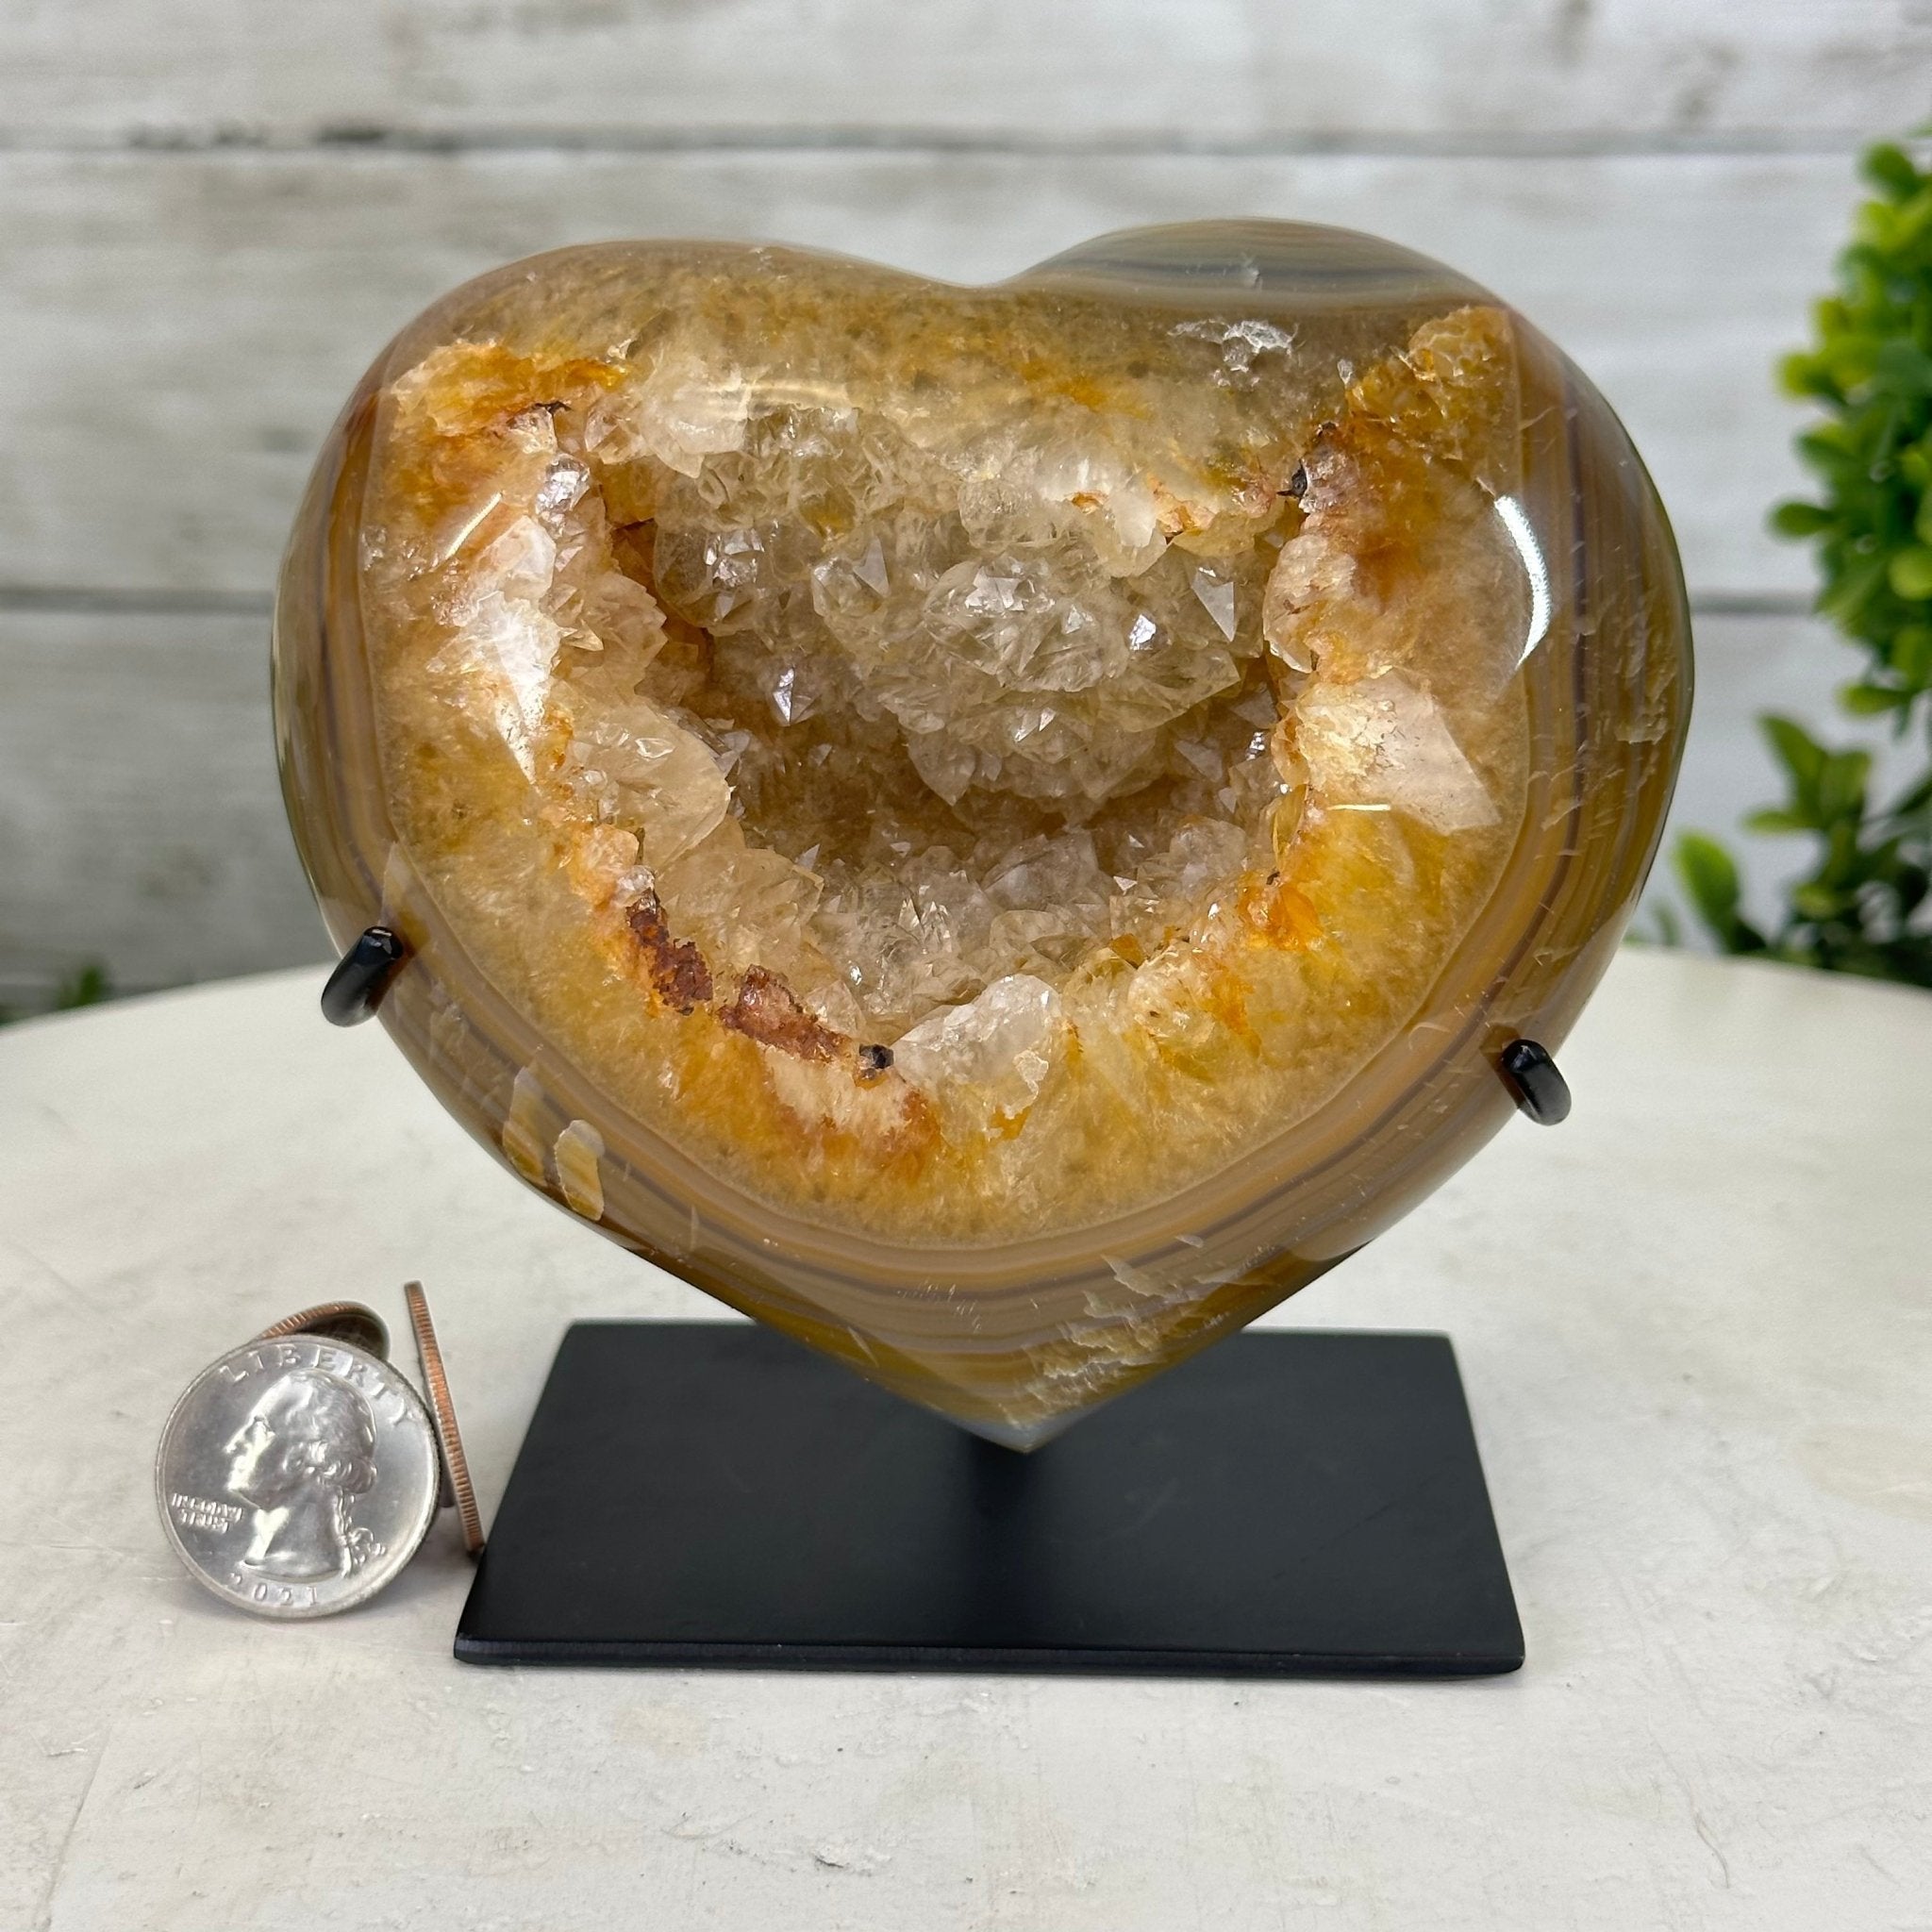 Polished Agate Heart Geode on a Metal Stand, 2 lbs & 4.8" Tall, Model #5468-0088 by Brazil Gems - Brazil GemsBrazil GemsPolished Agate Heart Geode on a Metal Stand, 2 lbs & 4.8" Tall, Model #5468-0088 by Brazil GemsHearts5468-0088